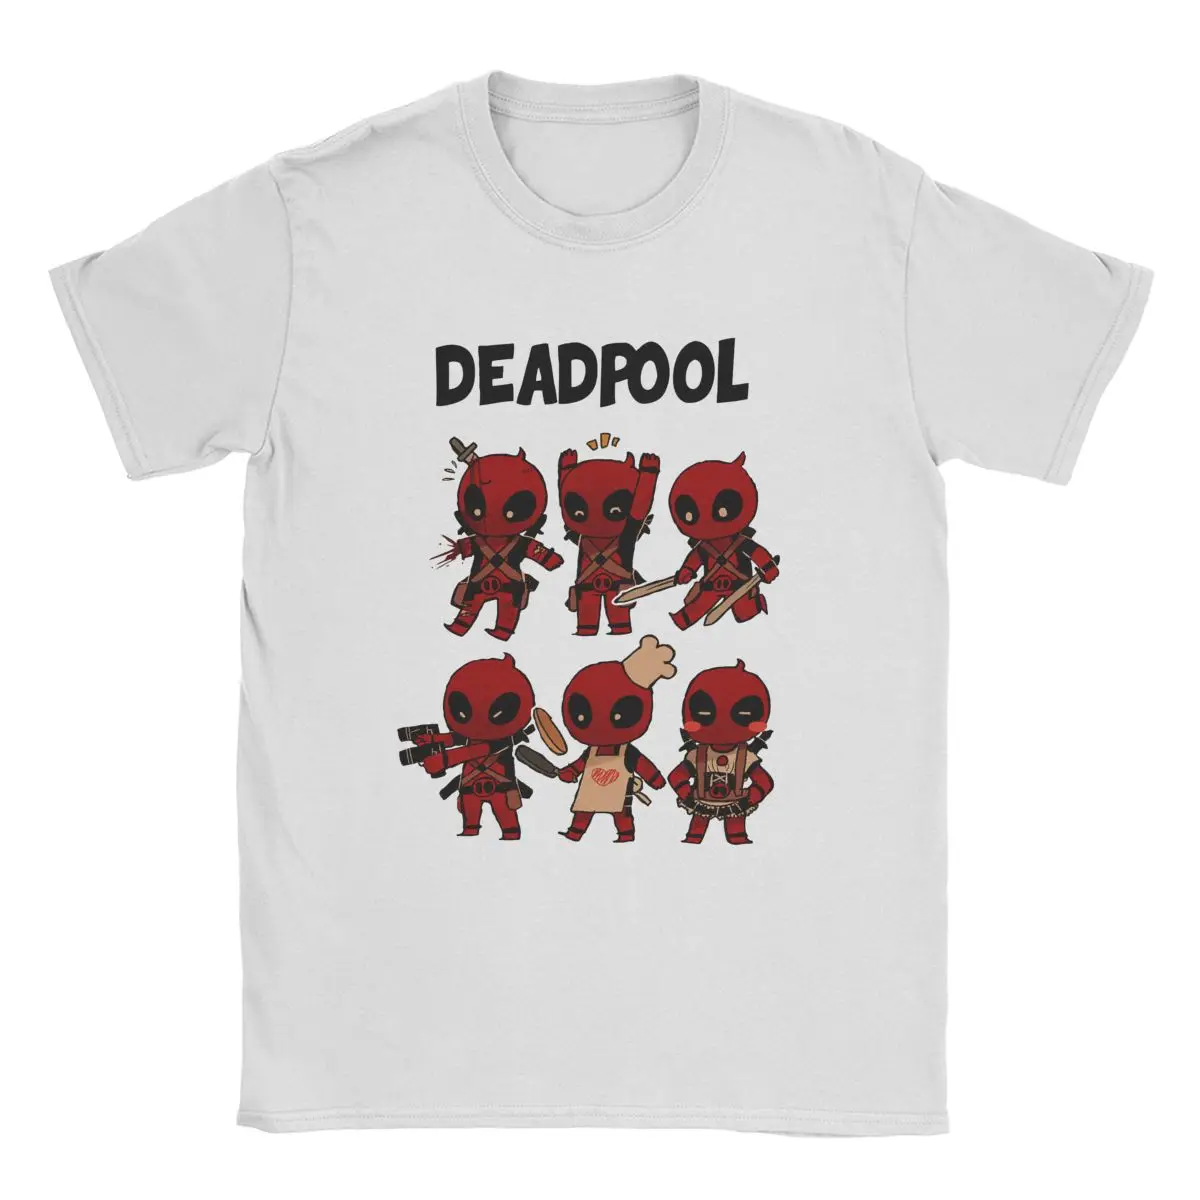 Casual Marvel Deadpool Cute T-Shirt for Men Crewneck 100% Cotton T Shirts   Short Sleeve Tees Birthday Present Clothes